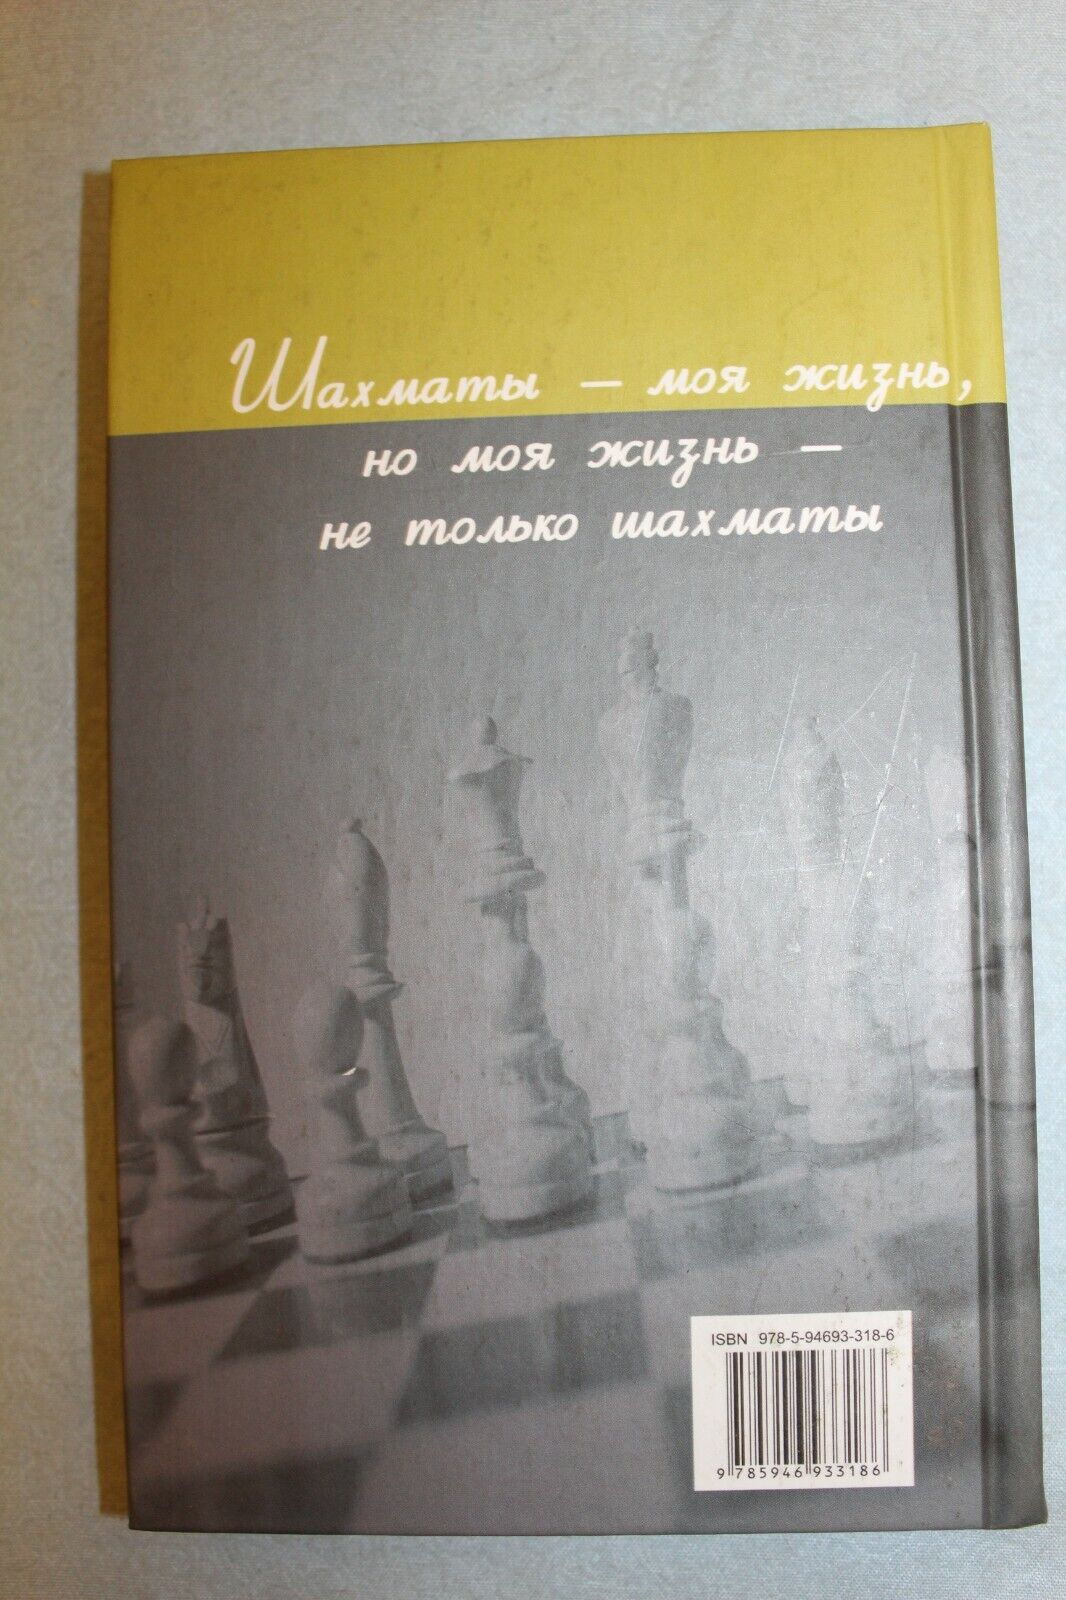 11043.Chess Book: A. Karpov. My Sister Kaissa. Memories of the the famous grandmaster